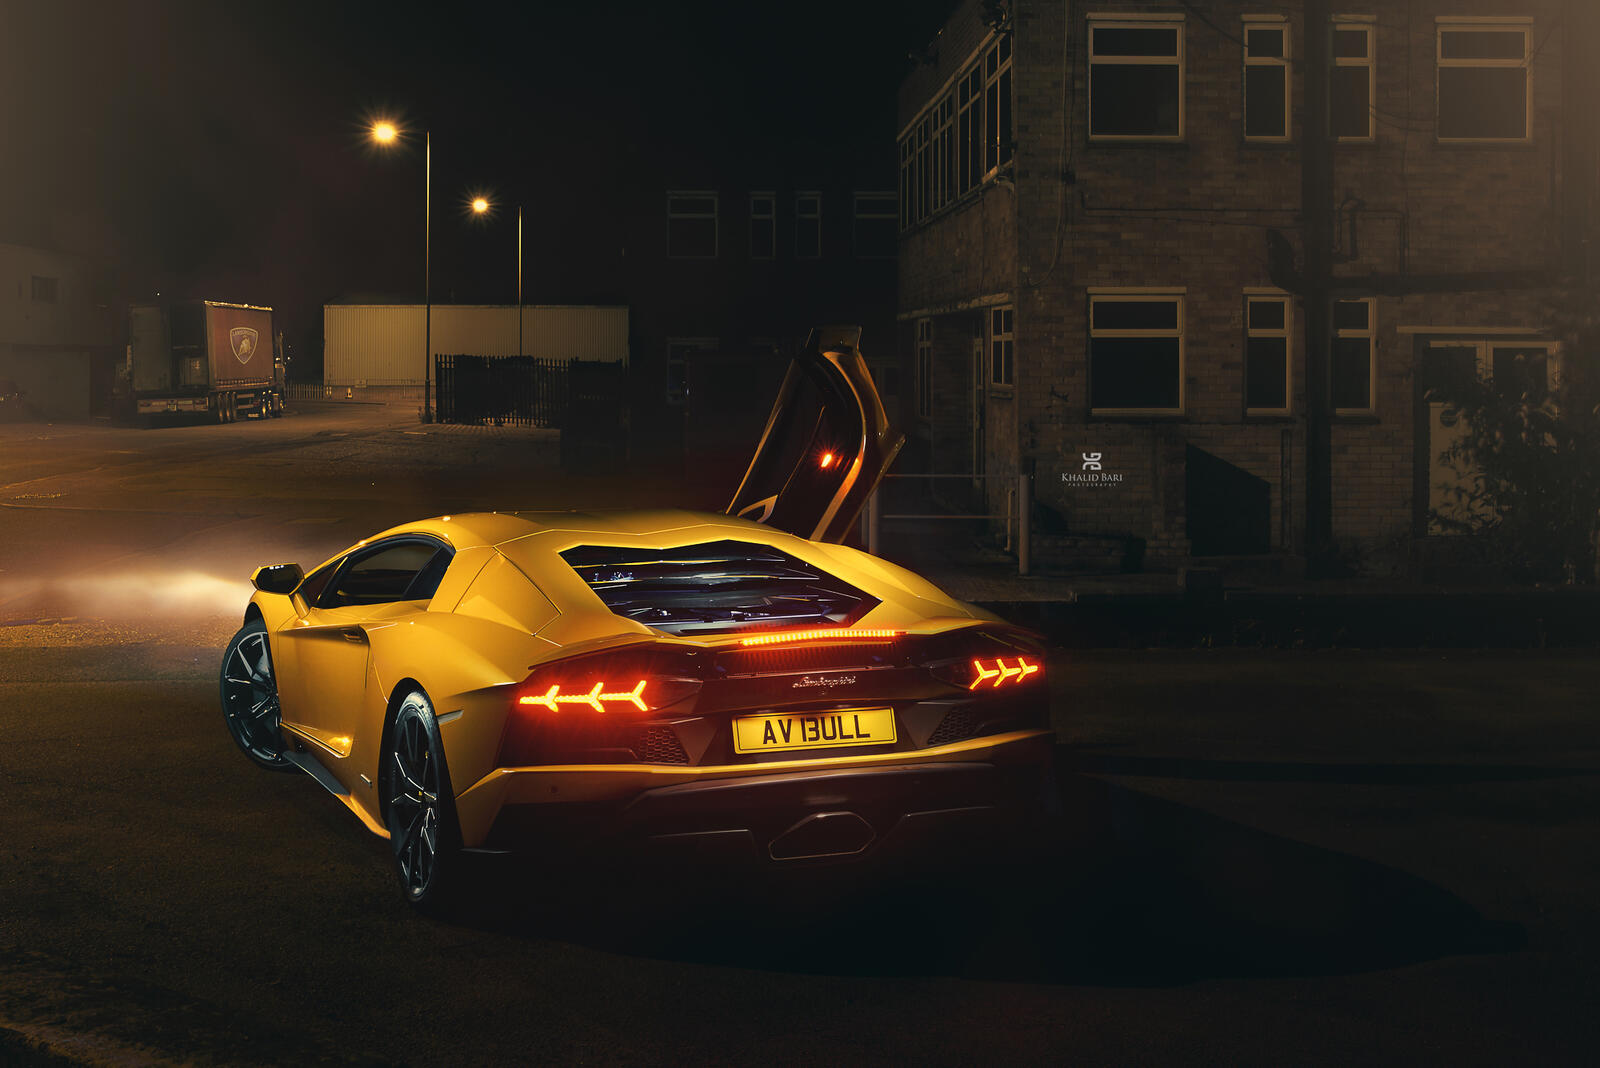 Free photo A yellow Lamborghini Aventador on a night street.